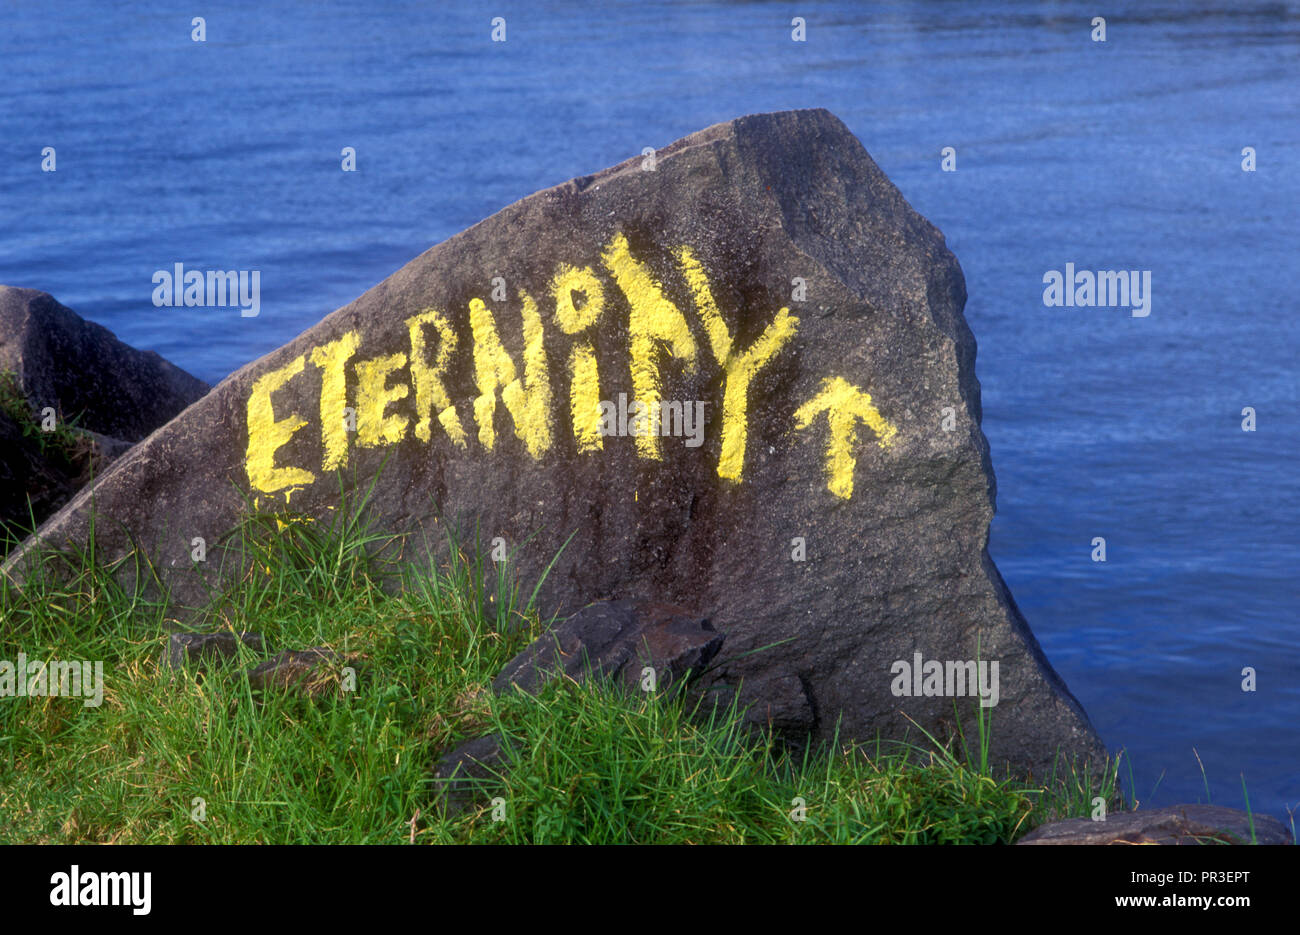 Eternity rock sign, coastal Queensland, Australia Stock Photo